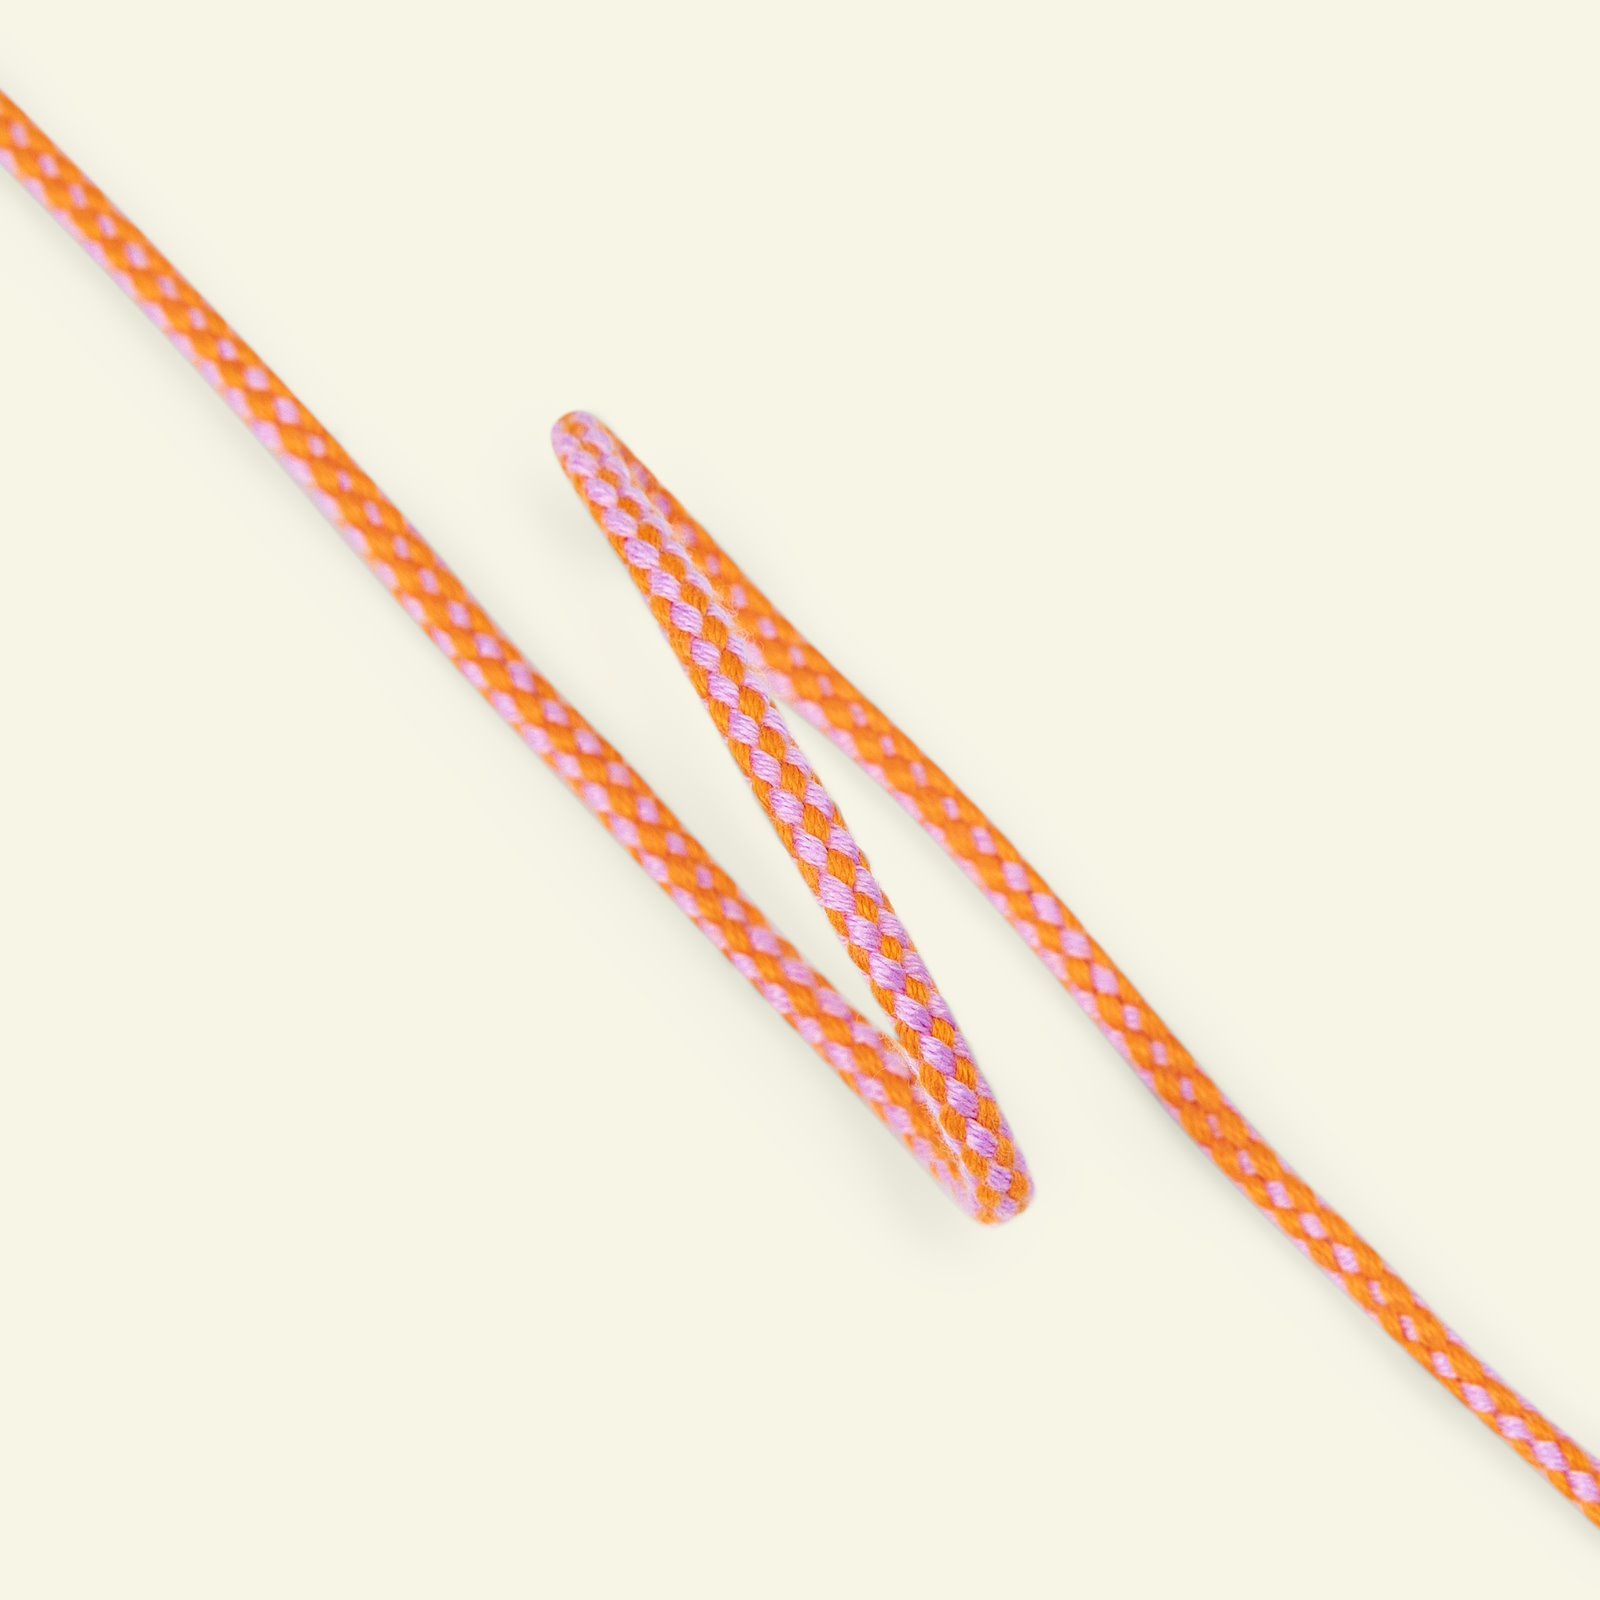 Anorakkordel 3,5mm Pink/Orange, 100m 75104_pack